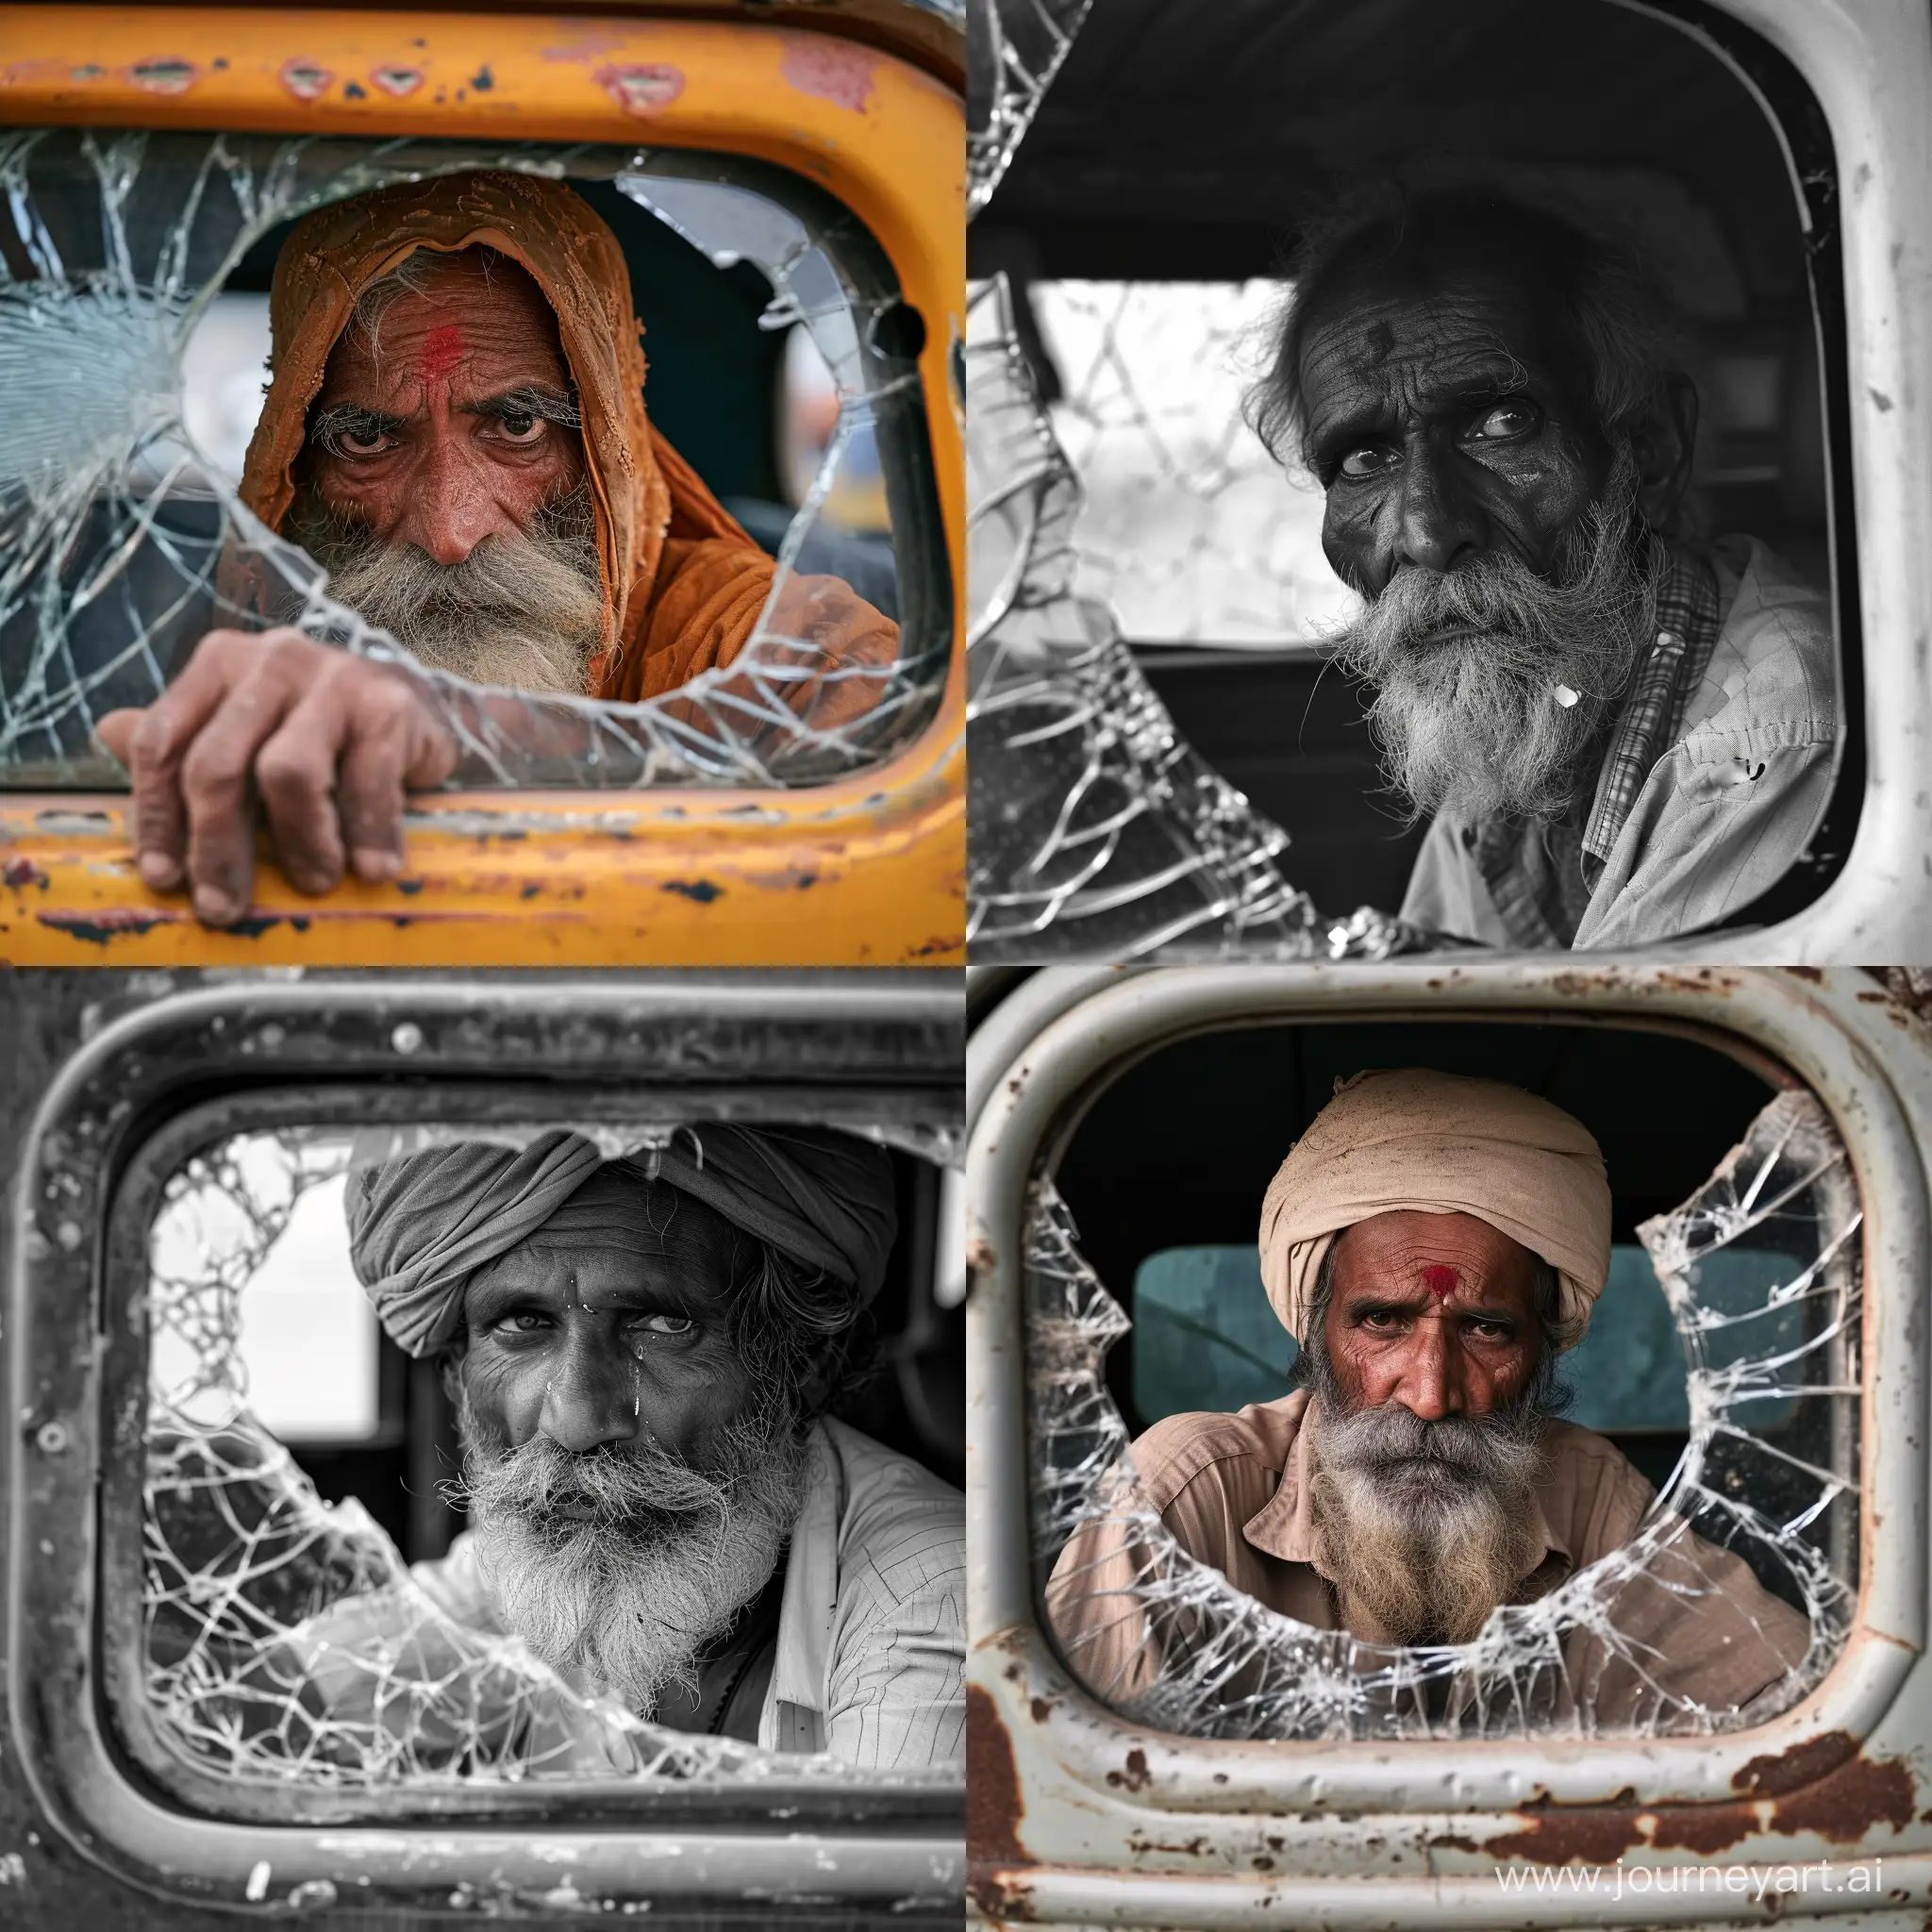  very old rabari rajasthan india looks trough a broken window of old car camera fuji xt3 50mmlens